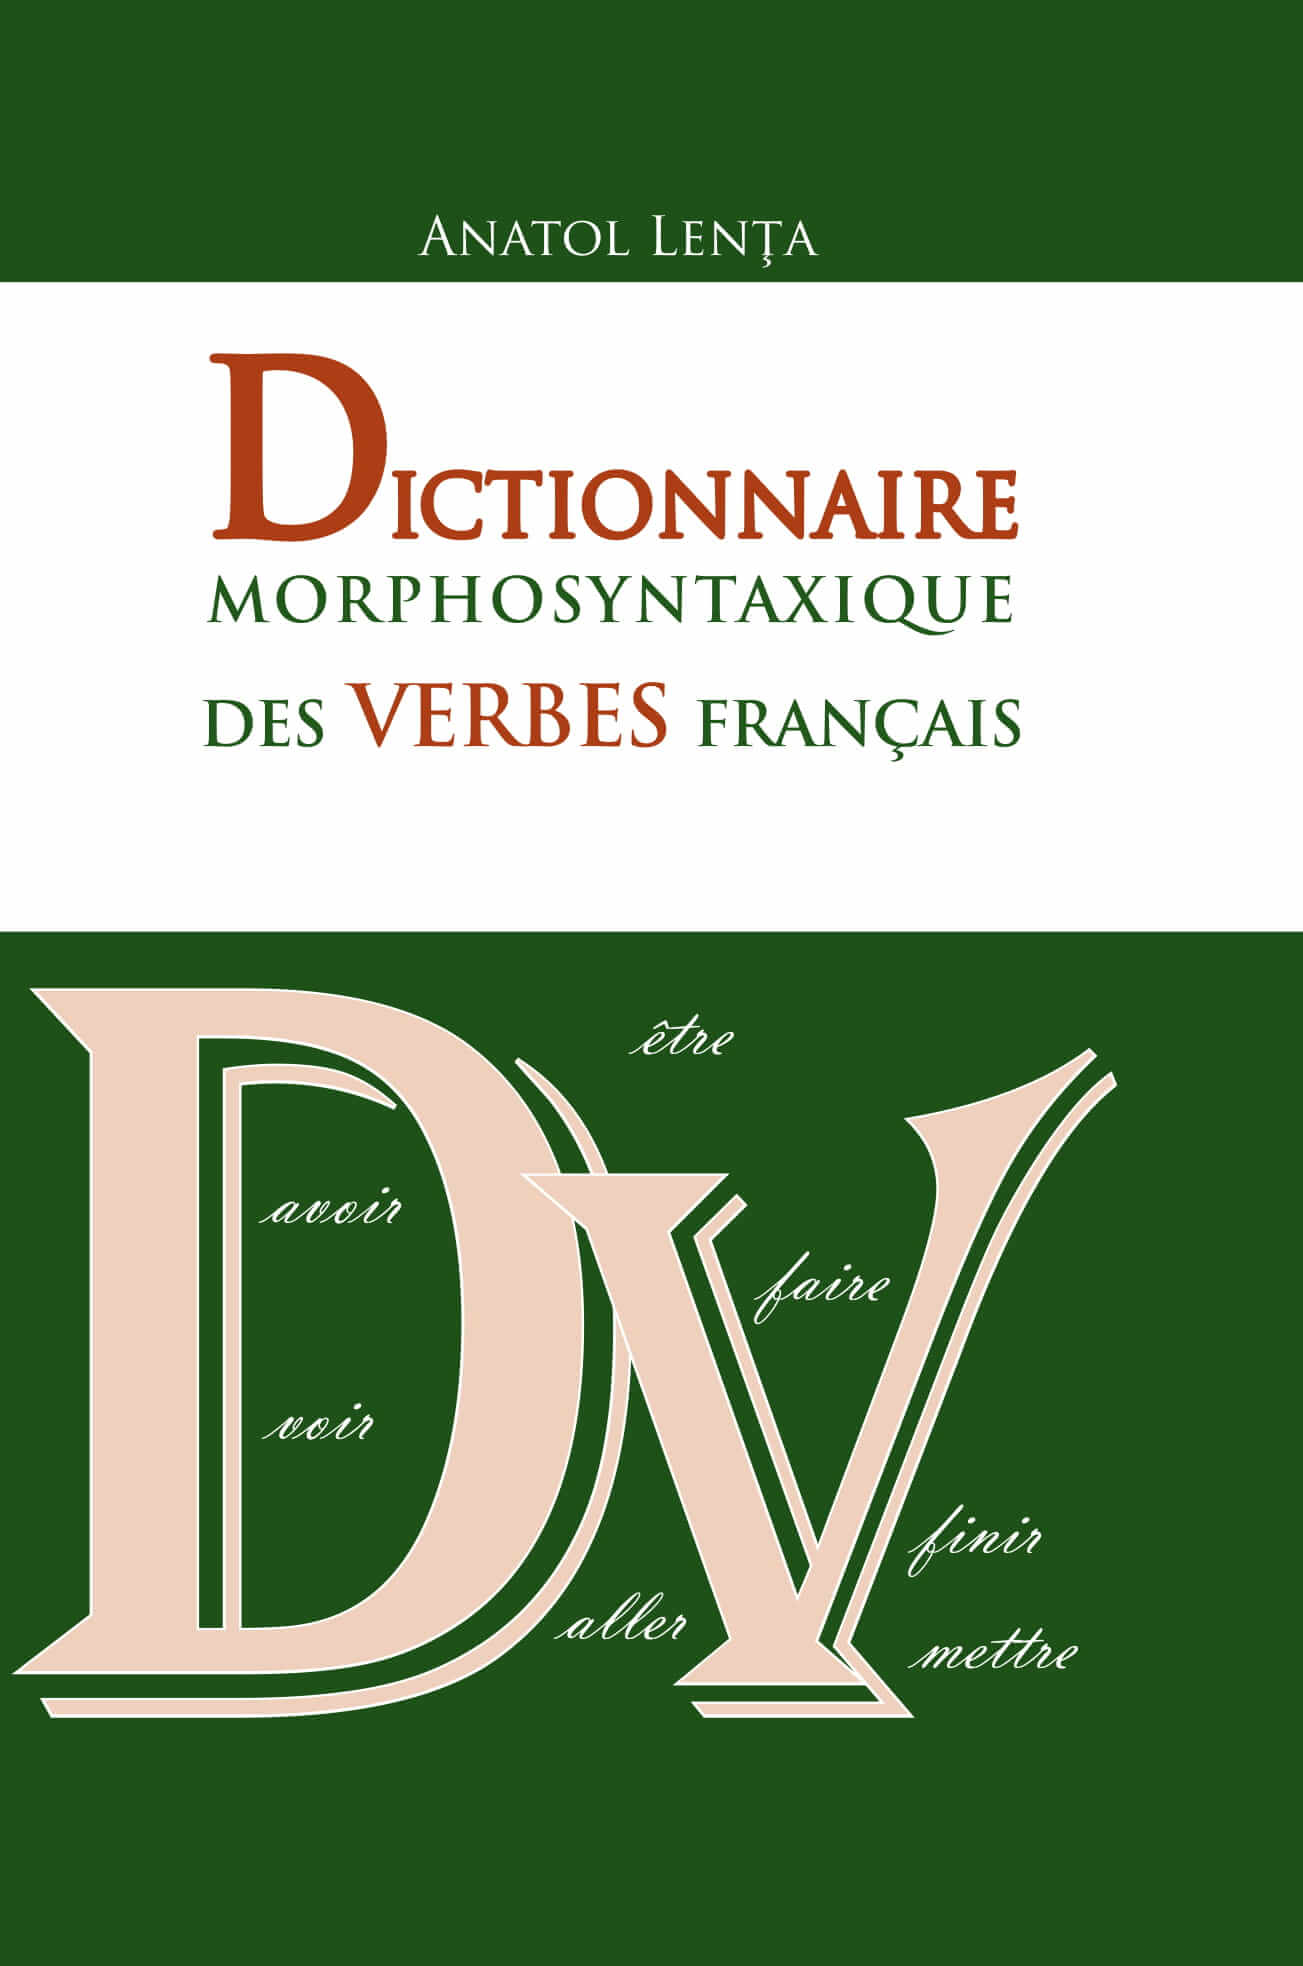 Dictionnaire morphosyntaxique des verbes francais | Anatol Lenta carturesti.ro imagine 2022